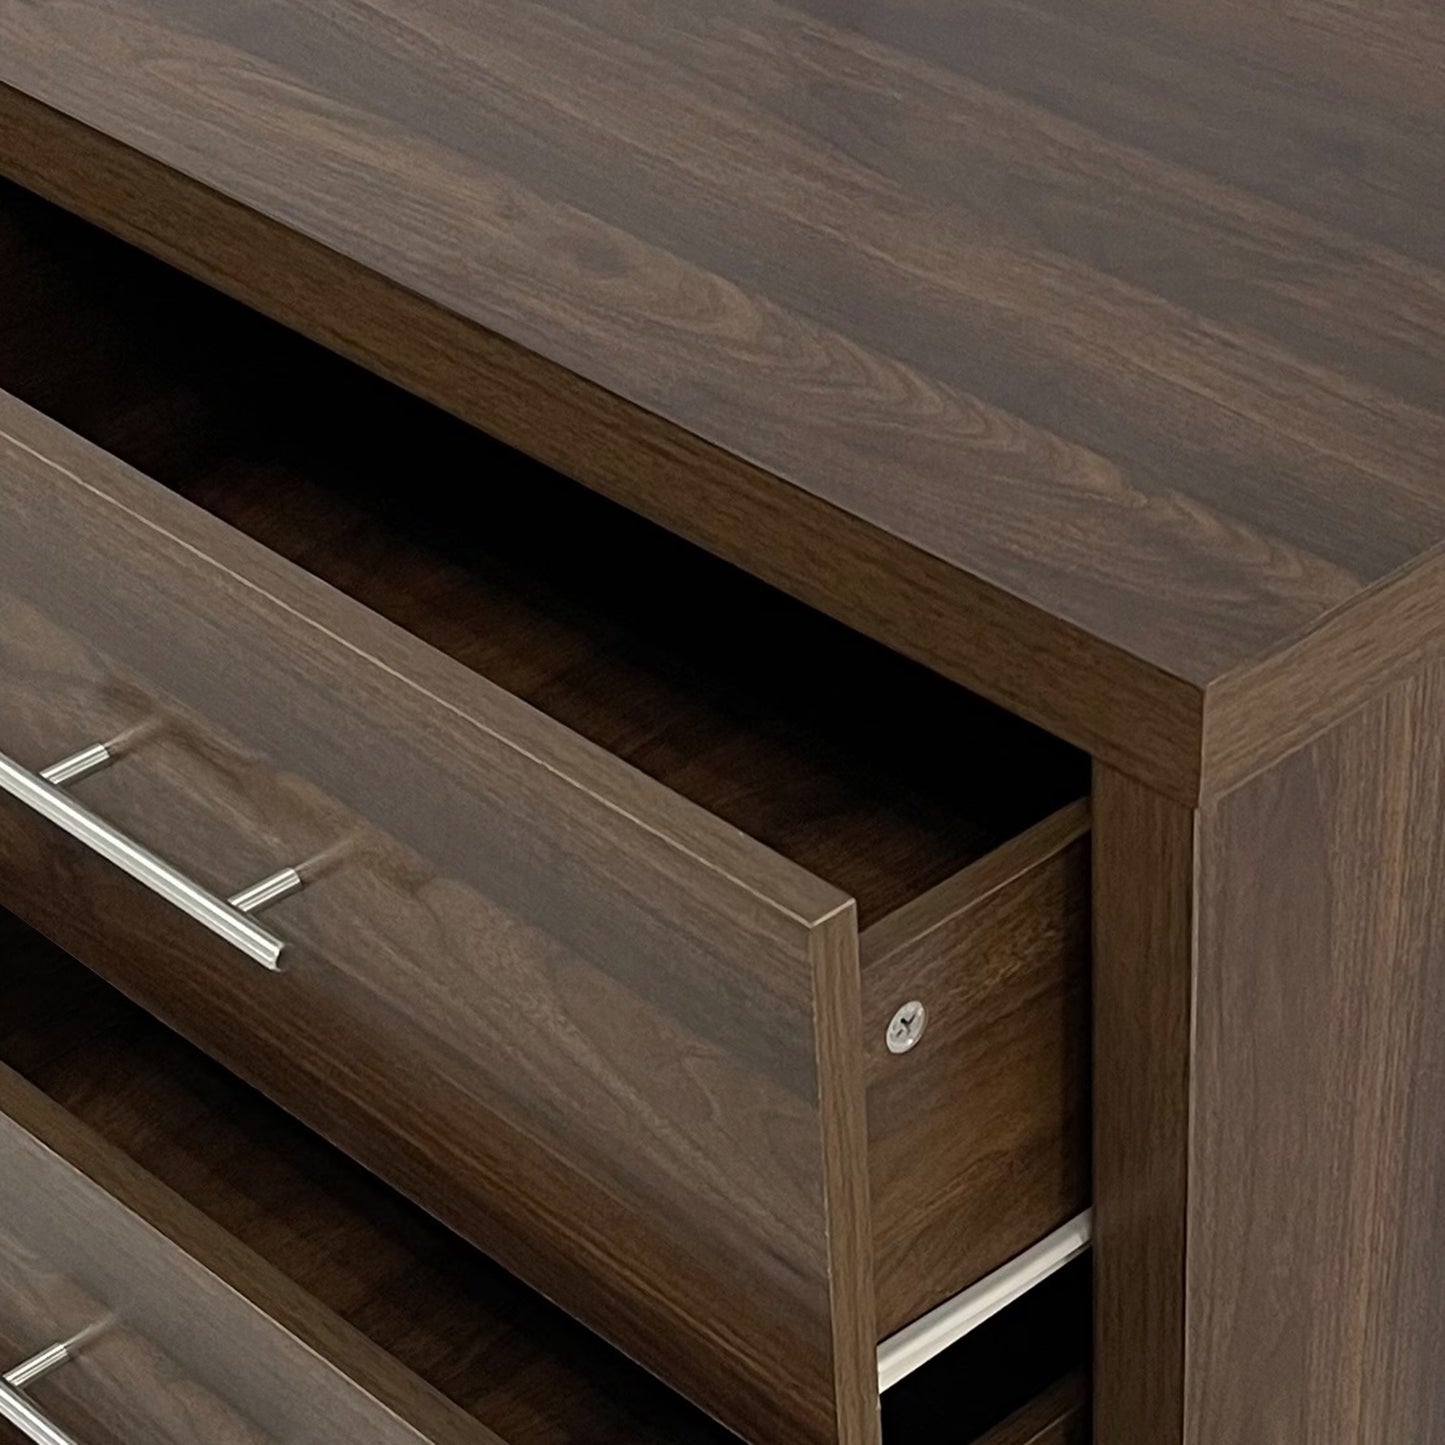 Marlette Modern Faux Wood 6 Drawer Double Dresser